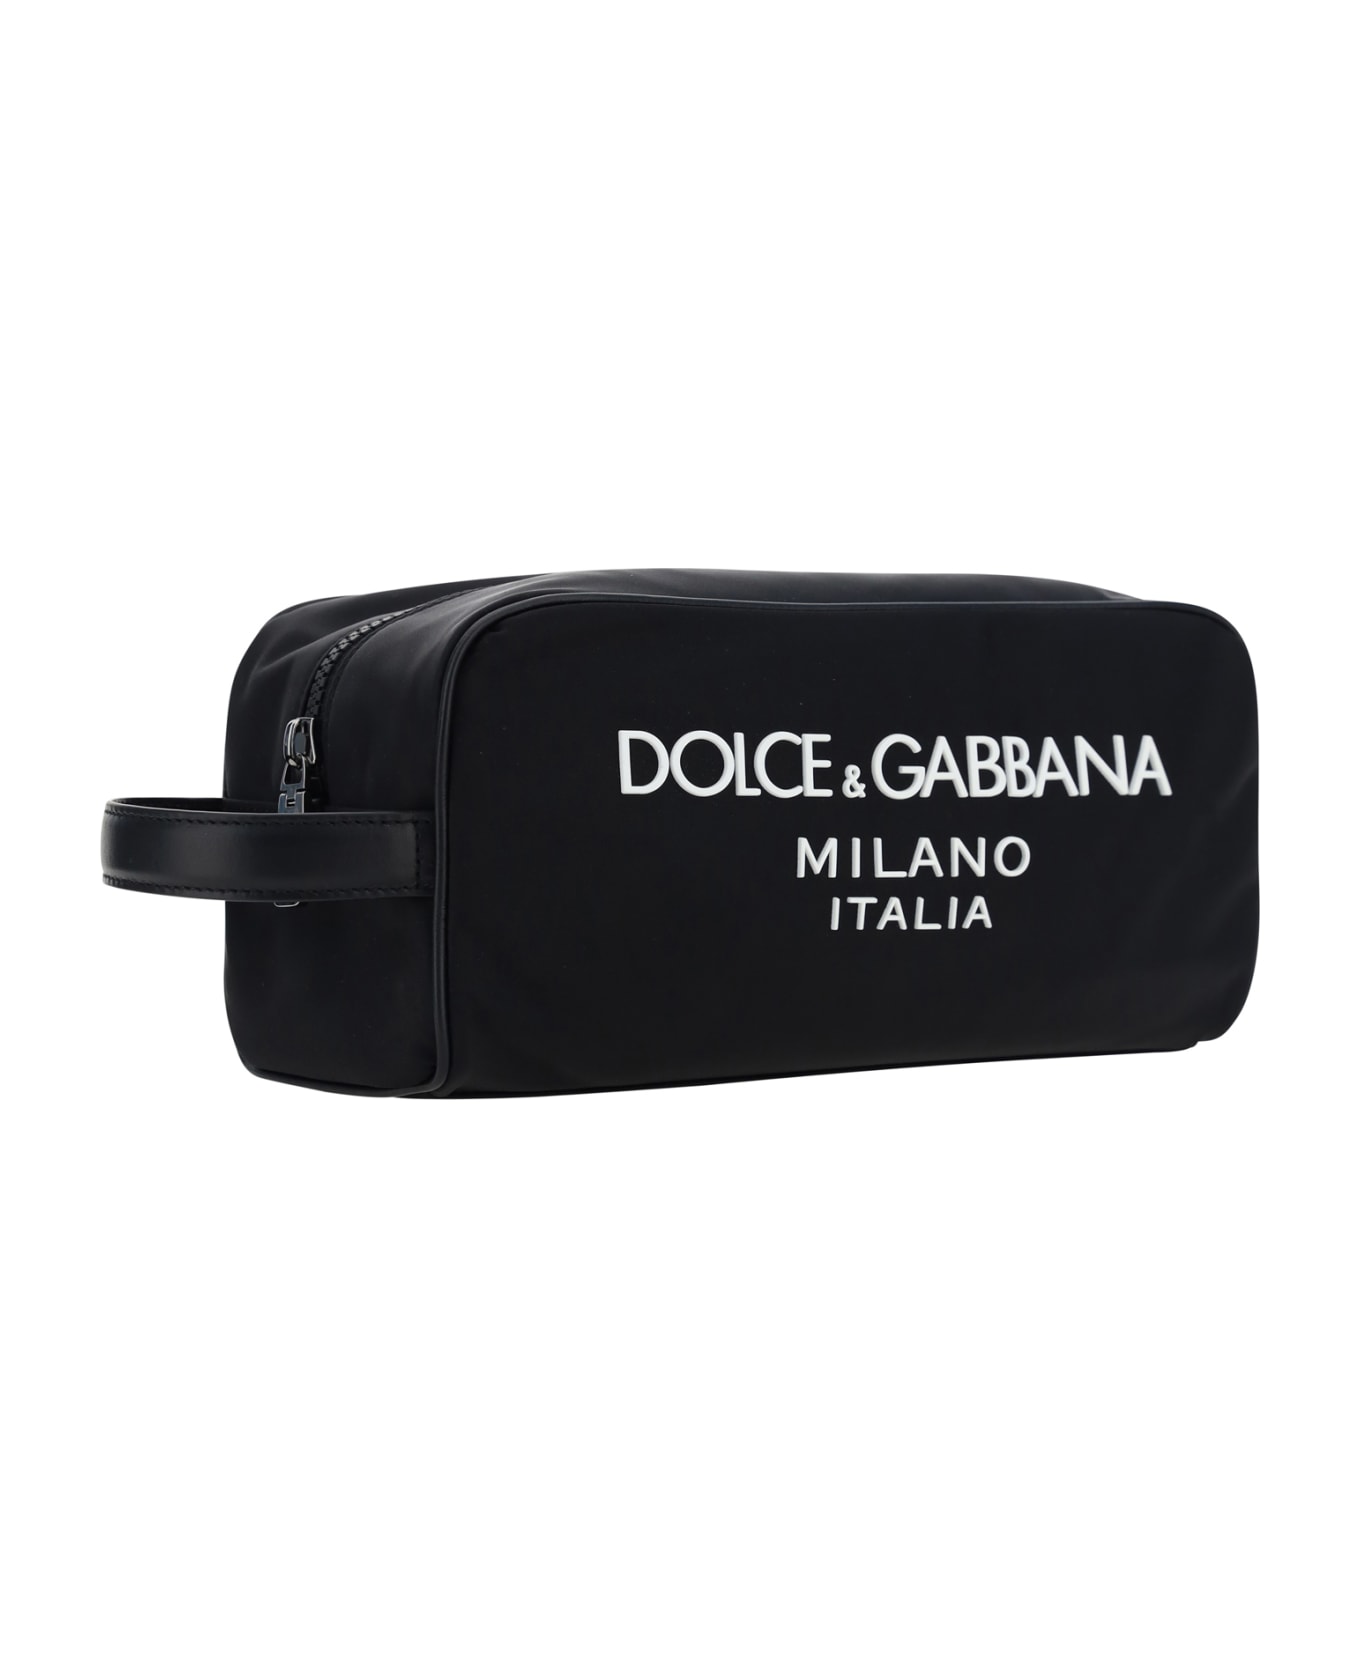 Dolce & Gabbana Beauty Case - Nero/nero